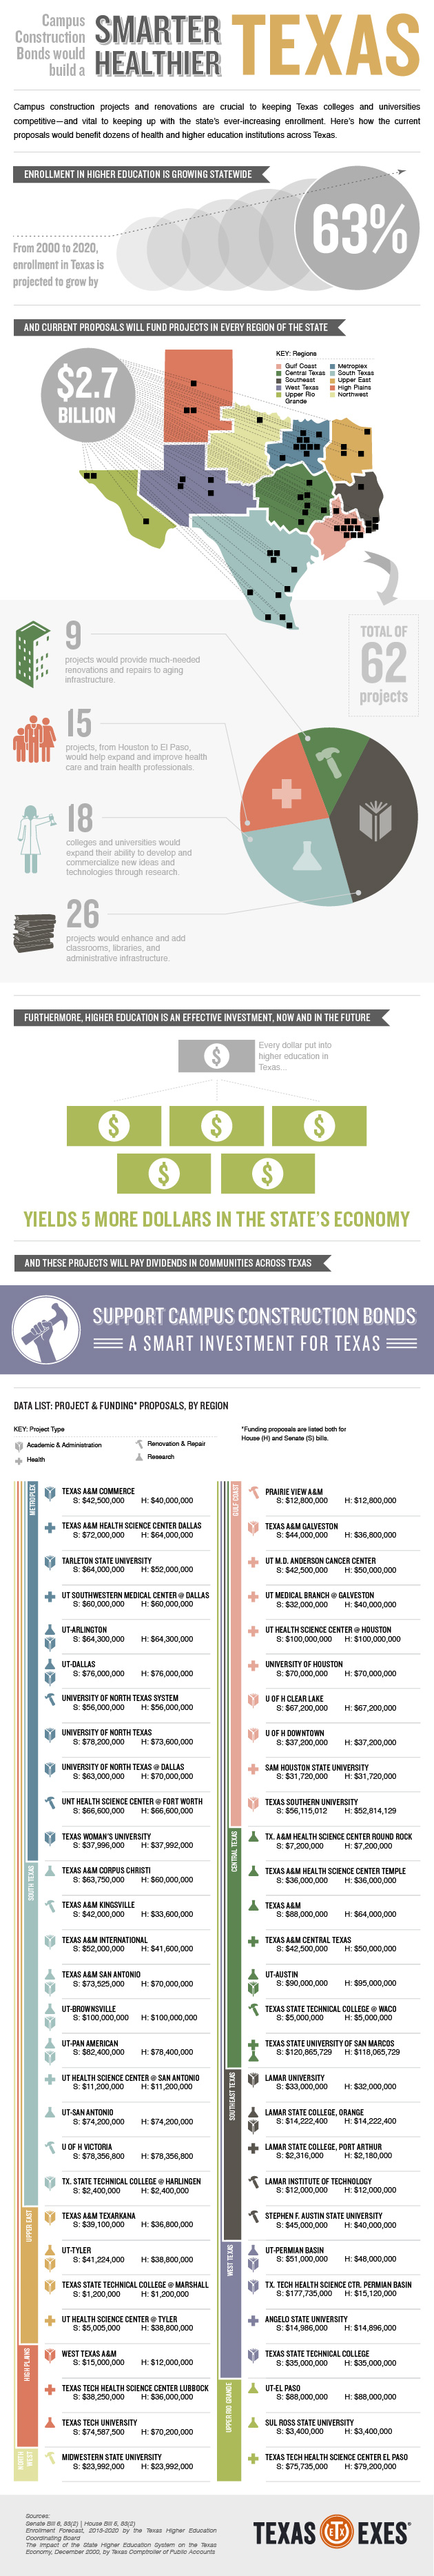 Campus Construction Bonds Would Mean a Smarter, Healthier Texas Infographic